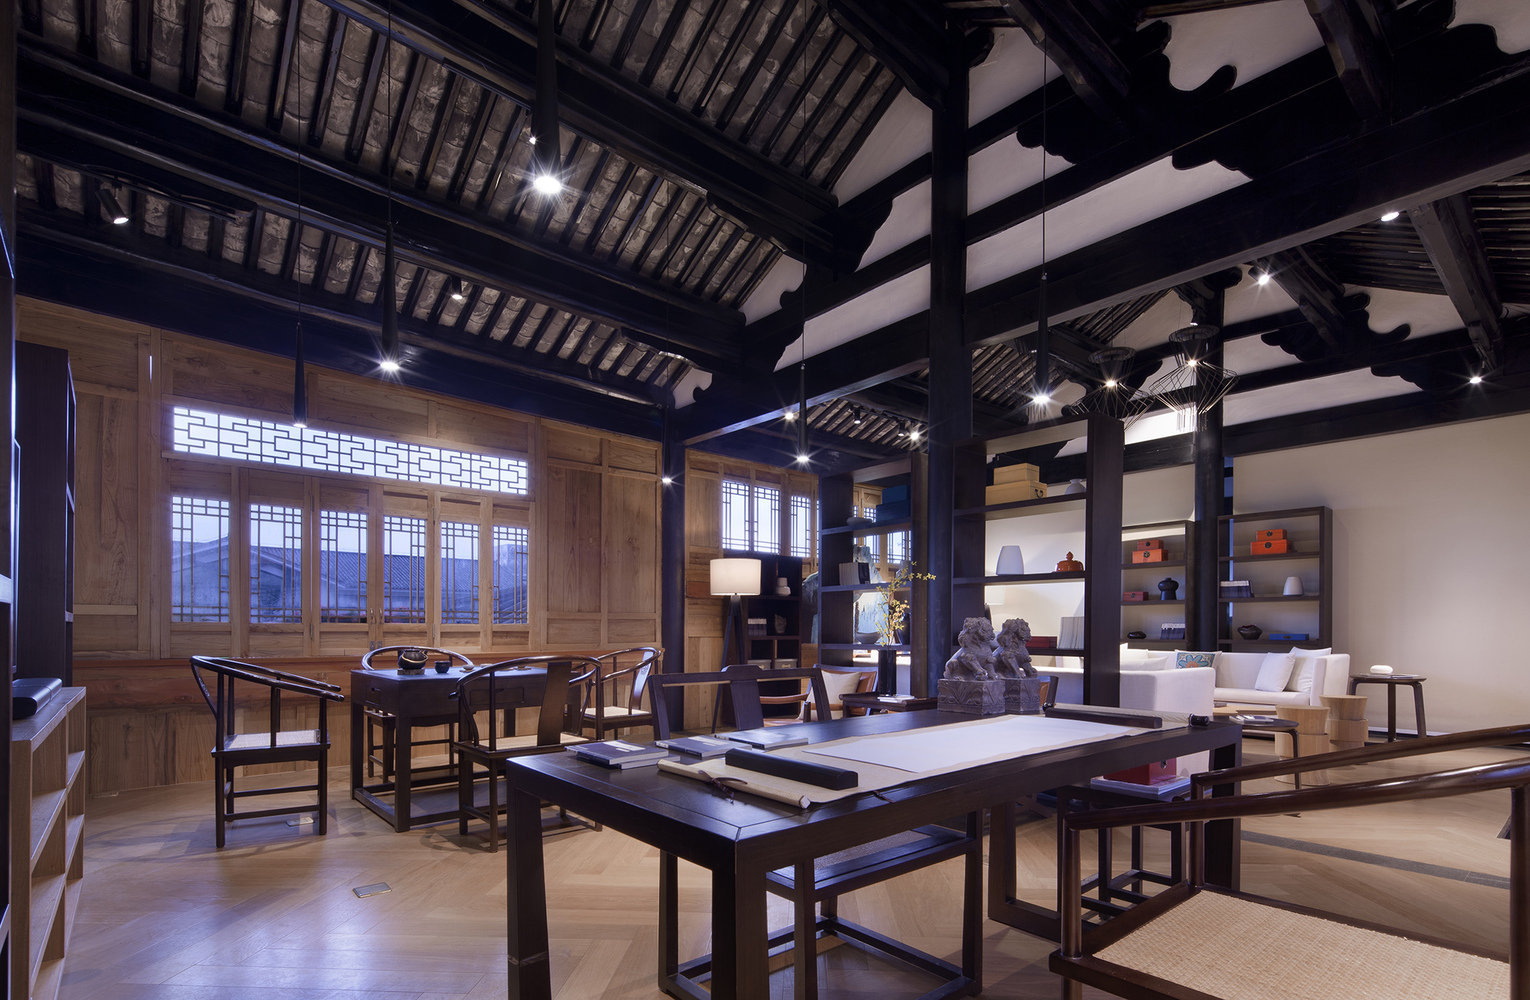 Design of Chunji Dali Ancient City Study Room